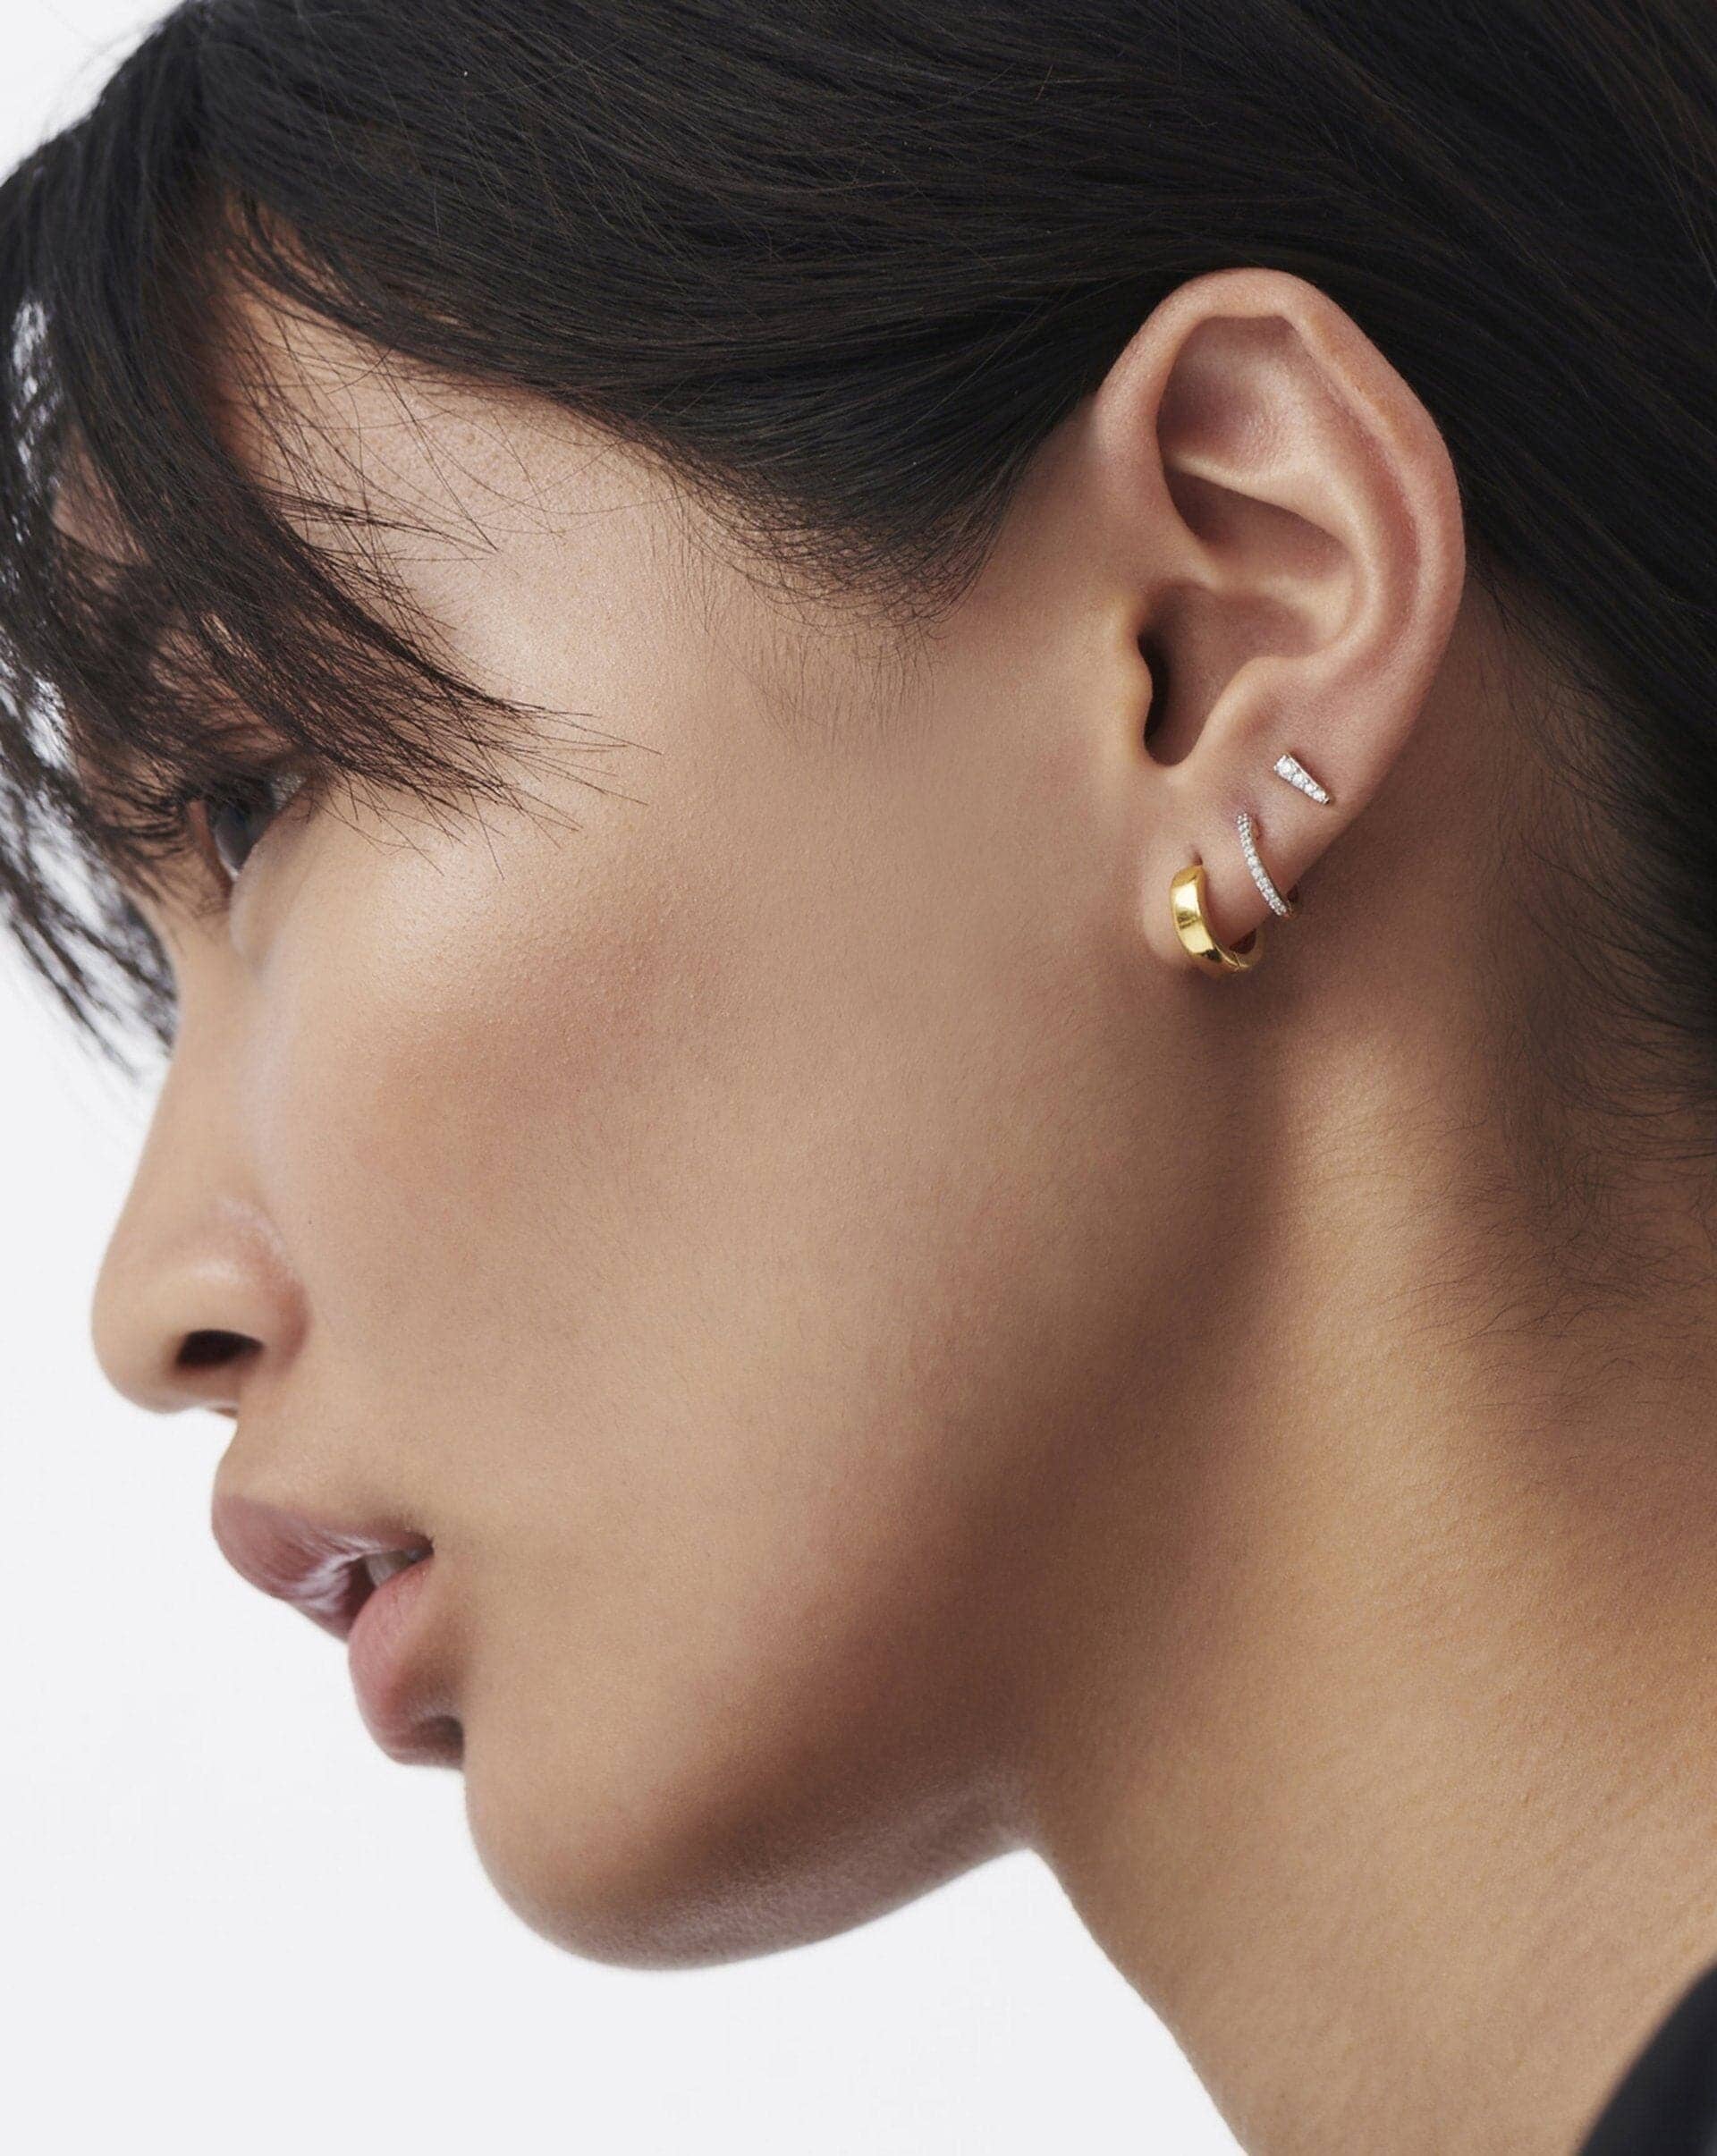 Celestial Pave Spike Stud Earrings | 18ct Gold Plated Vermeil/Cubic Zirconia Earrings Missoma 